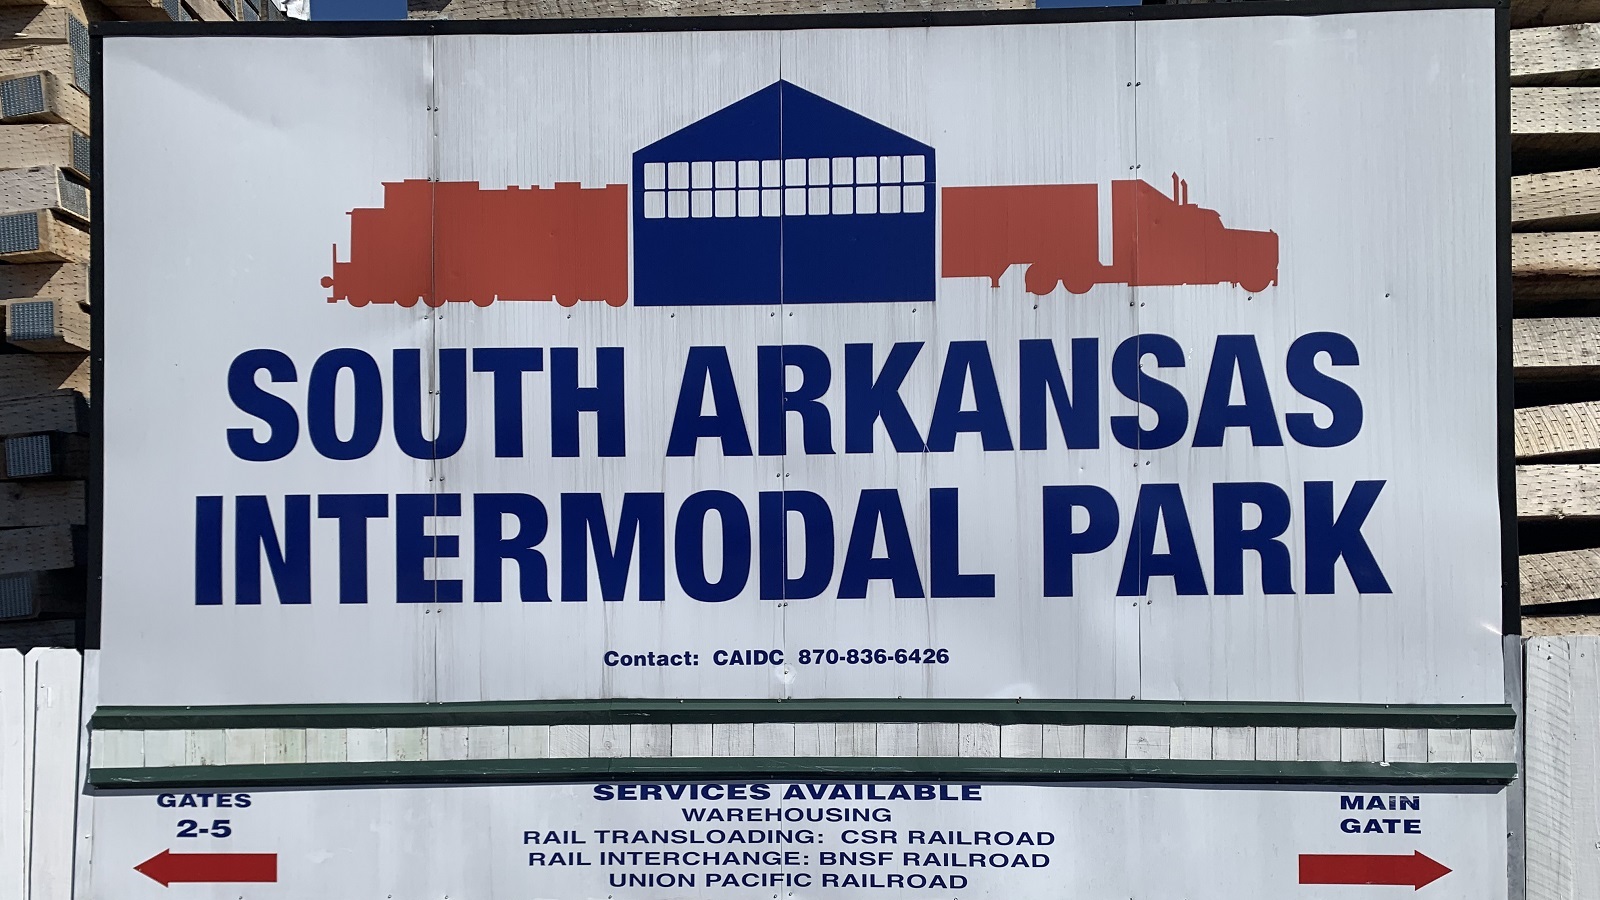 South Arkansas Intermodal Park